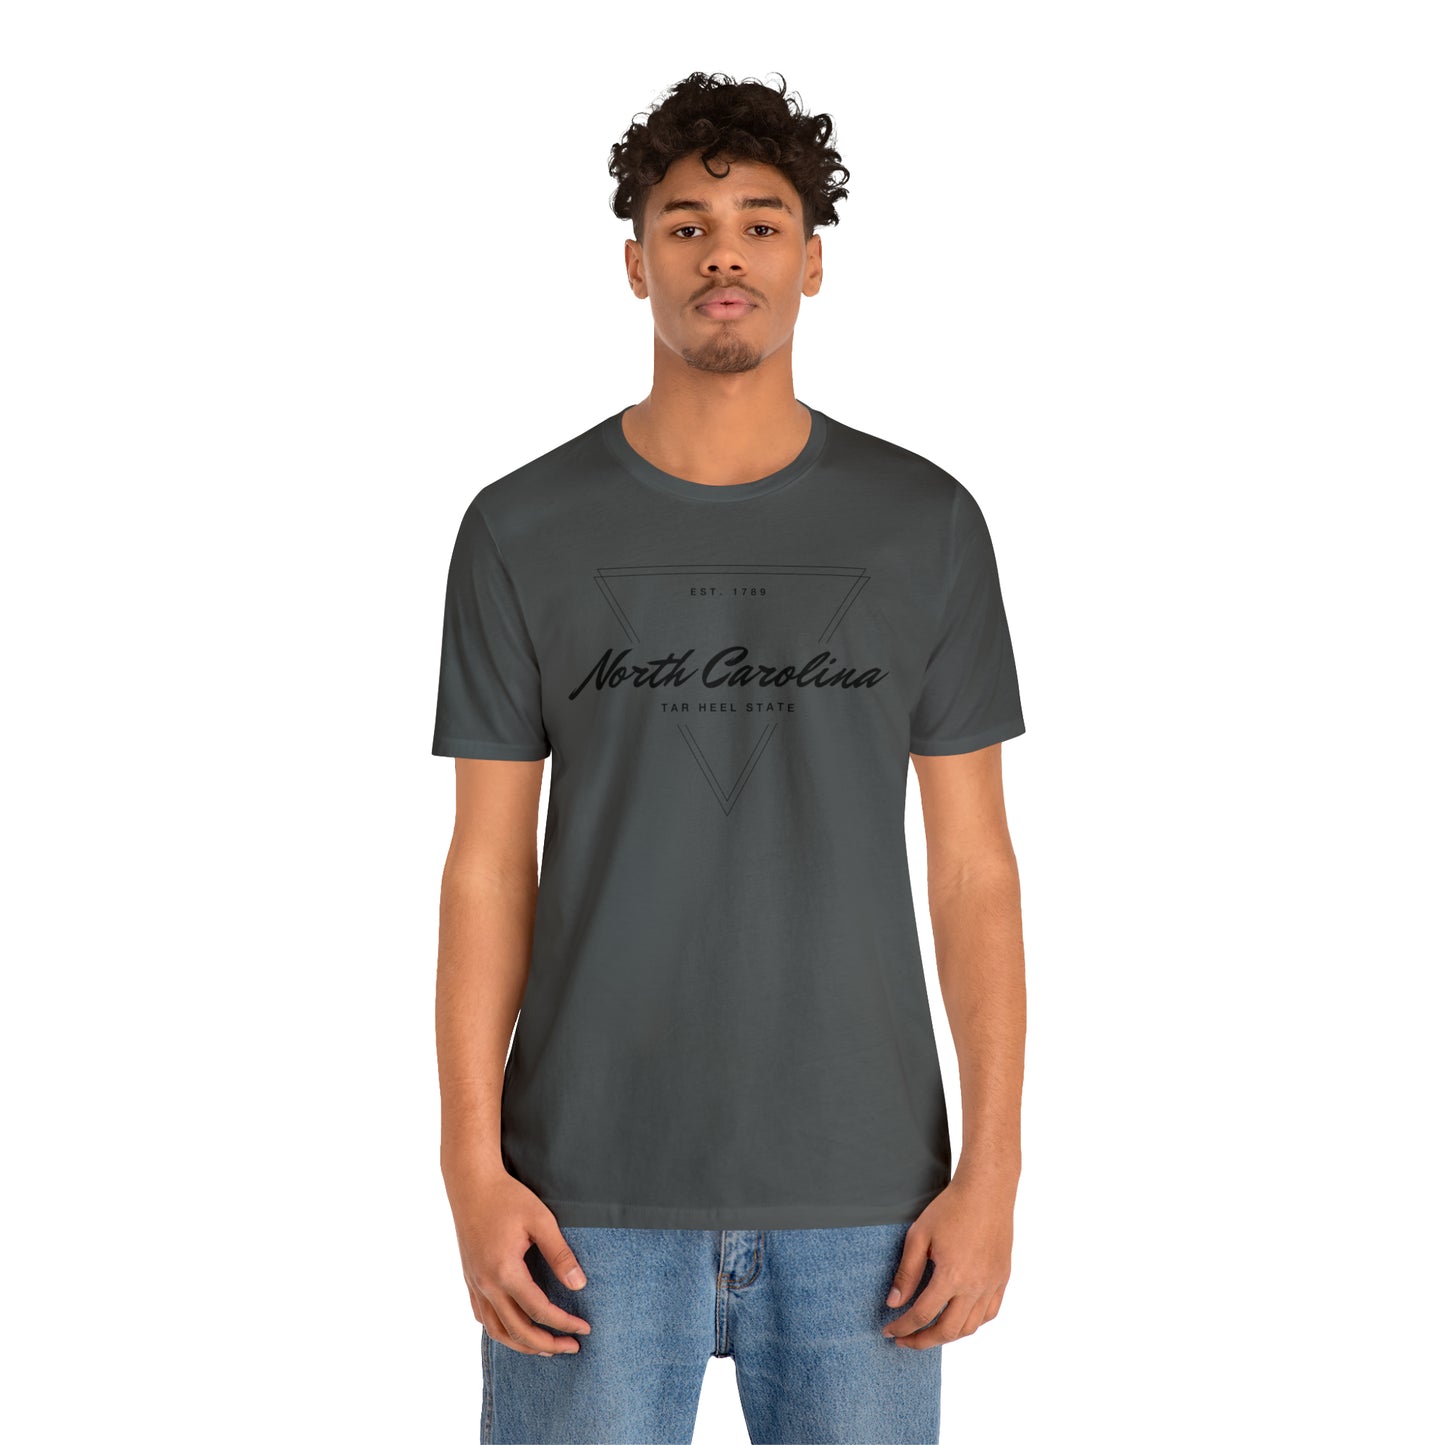 North Carolina Geometric Shirt